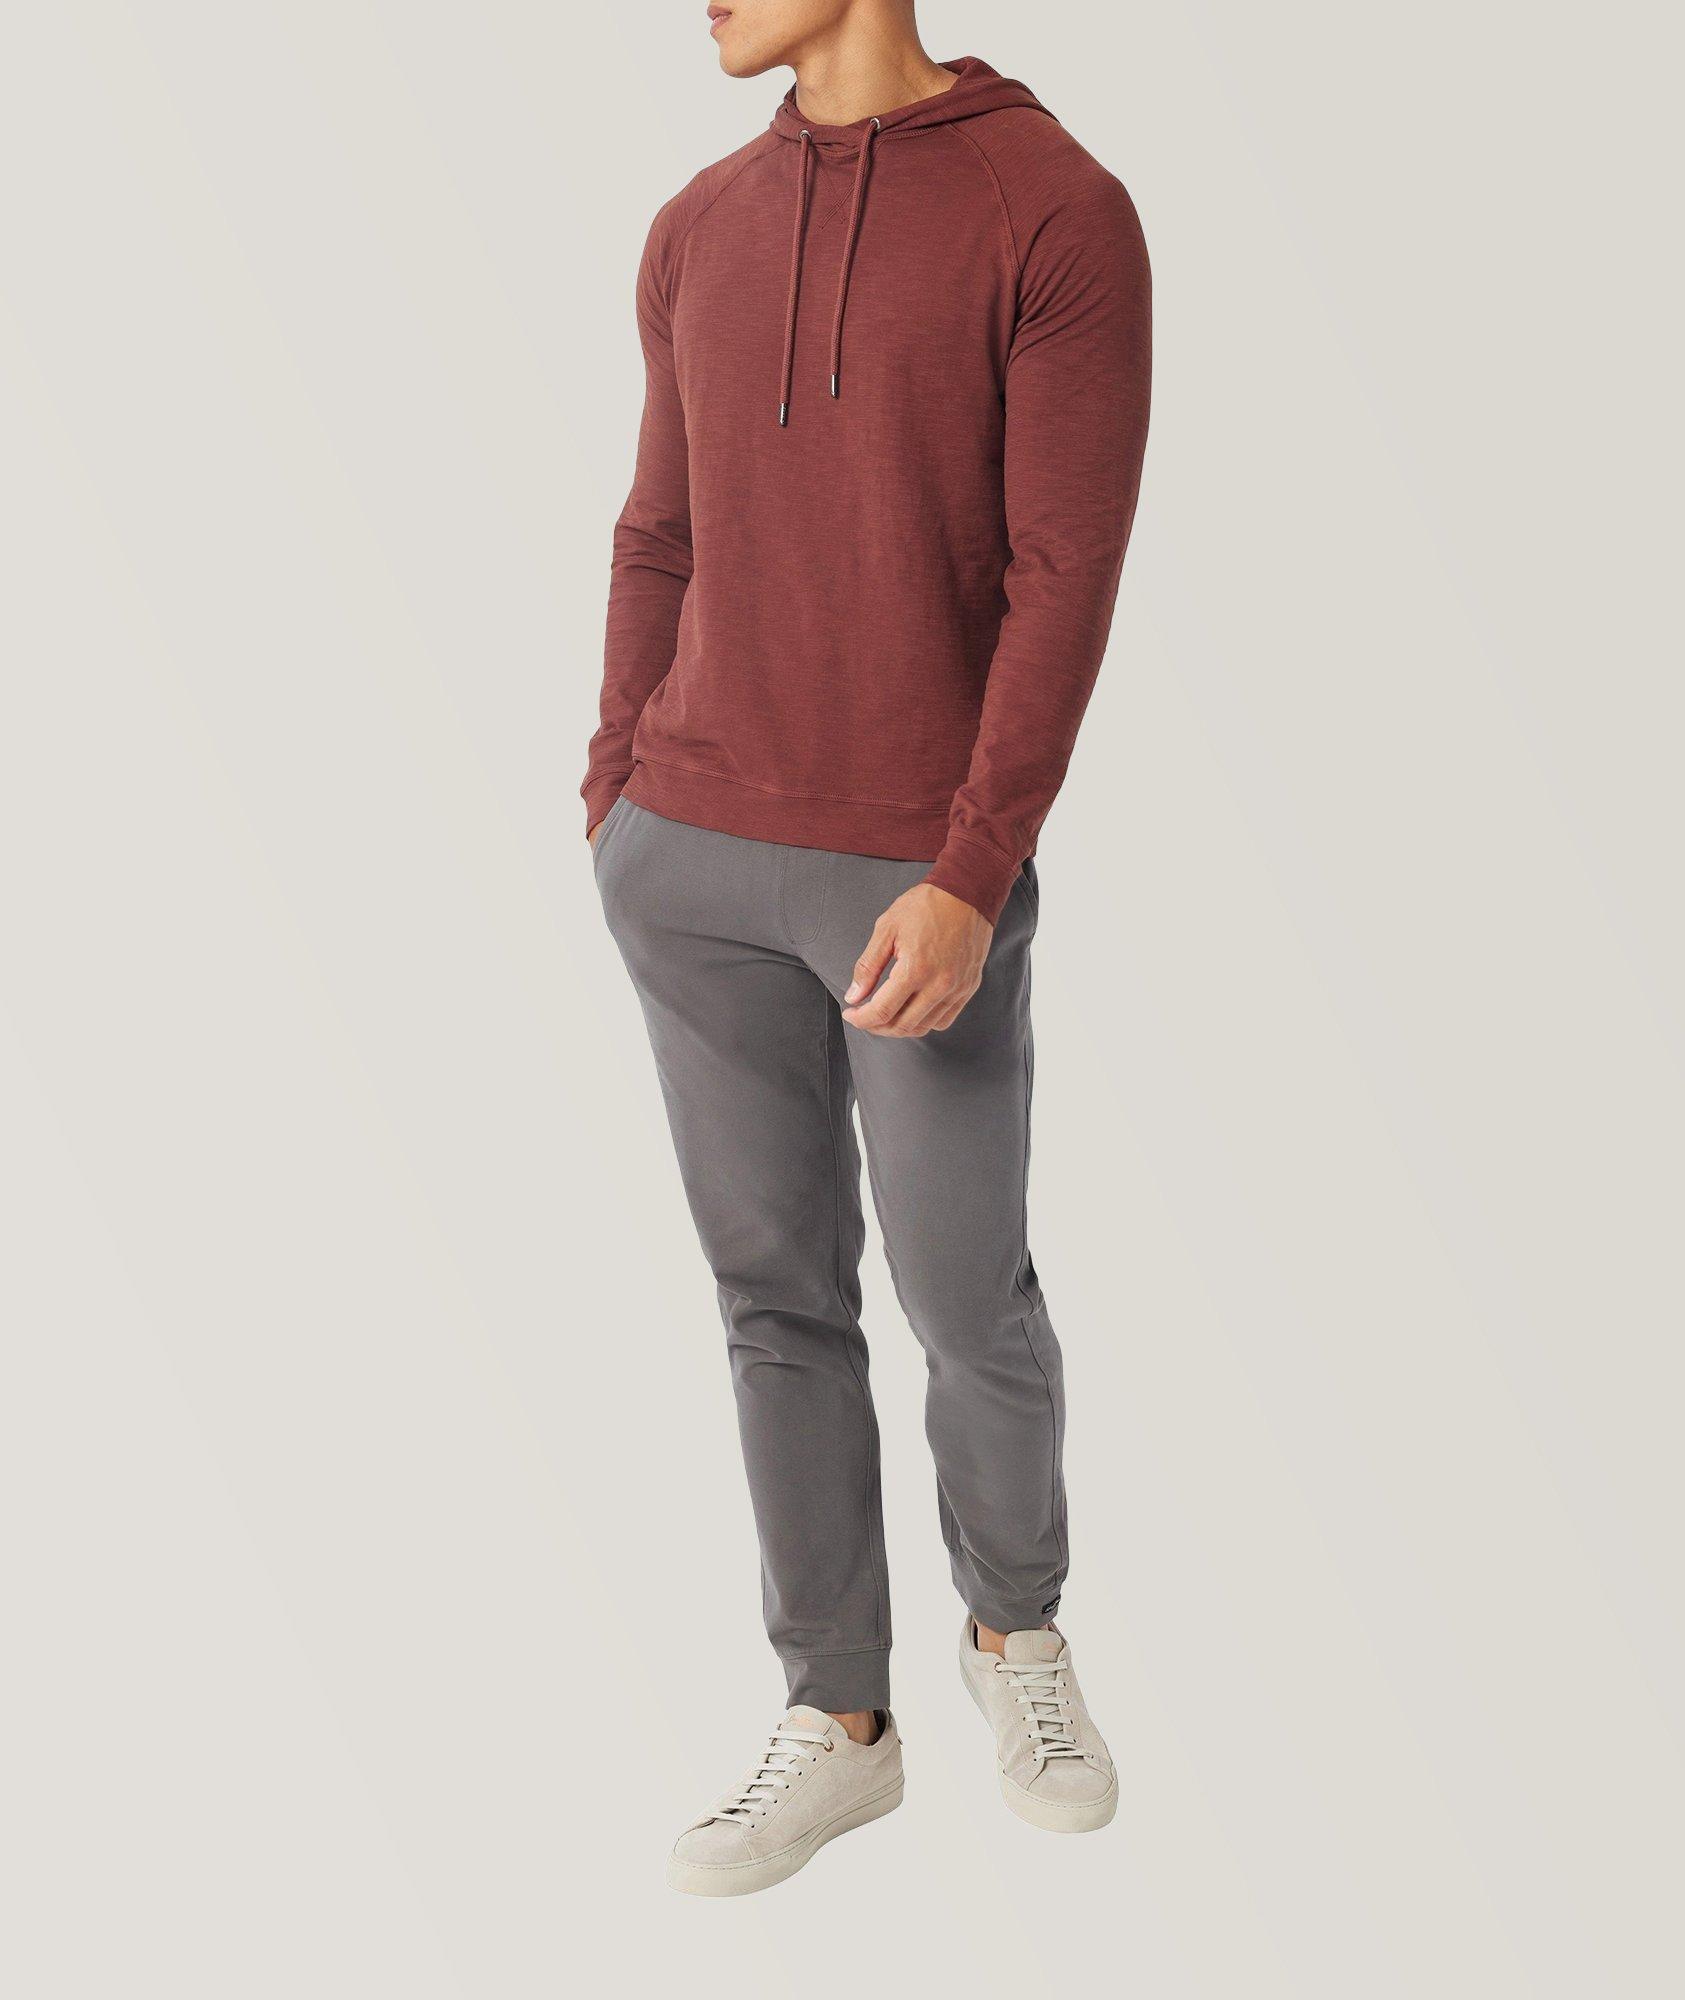 Long-Sleeve Soft Slub Hooded Sweater image 0